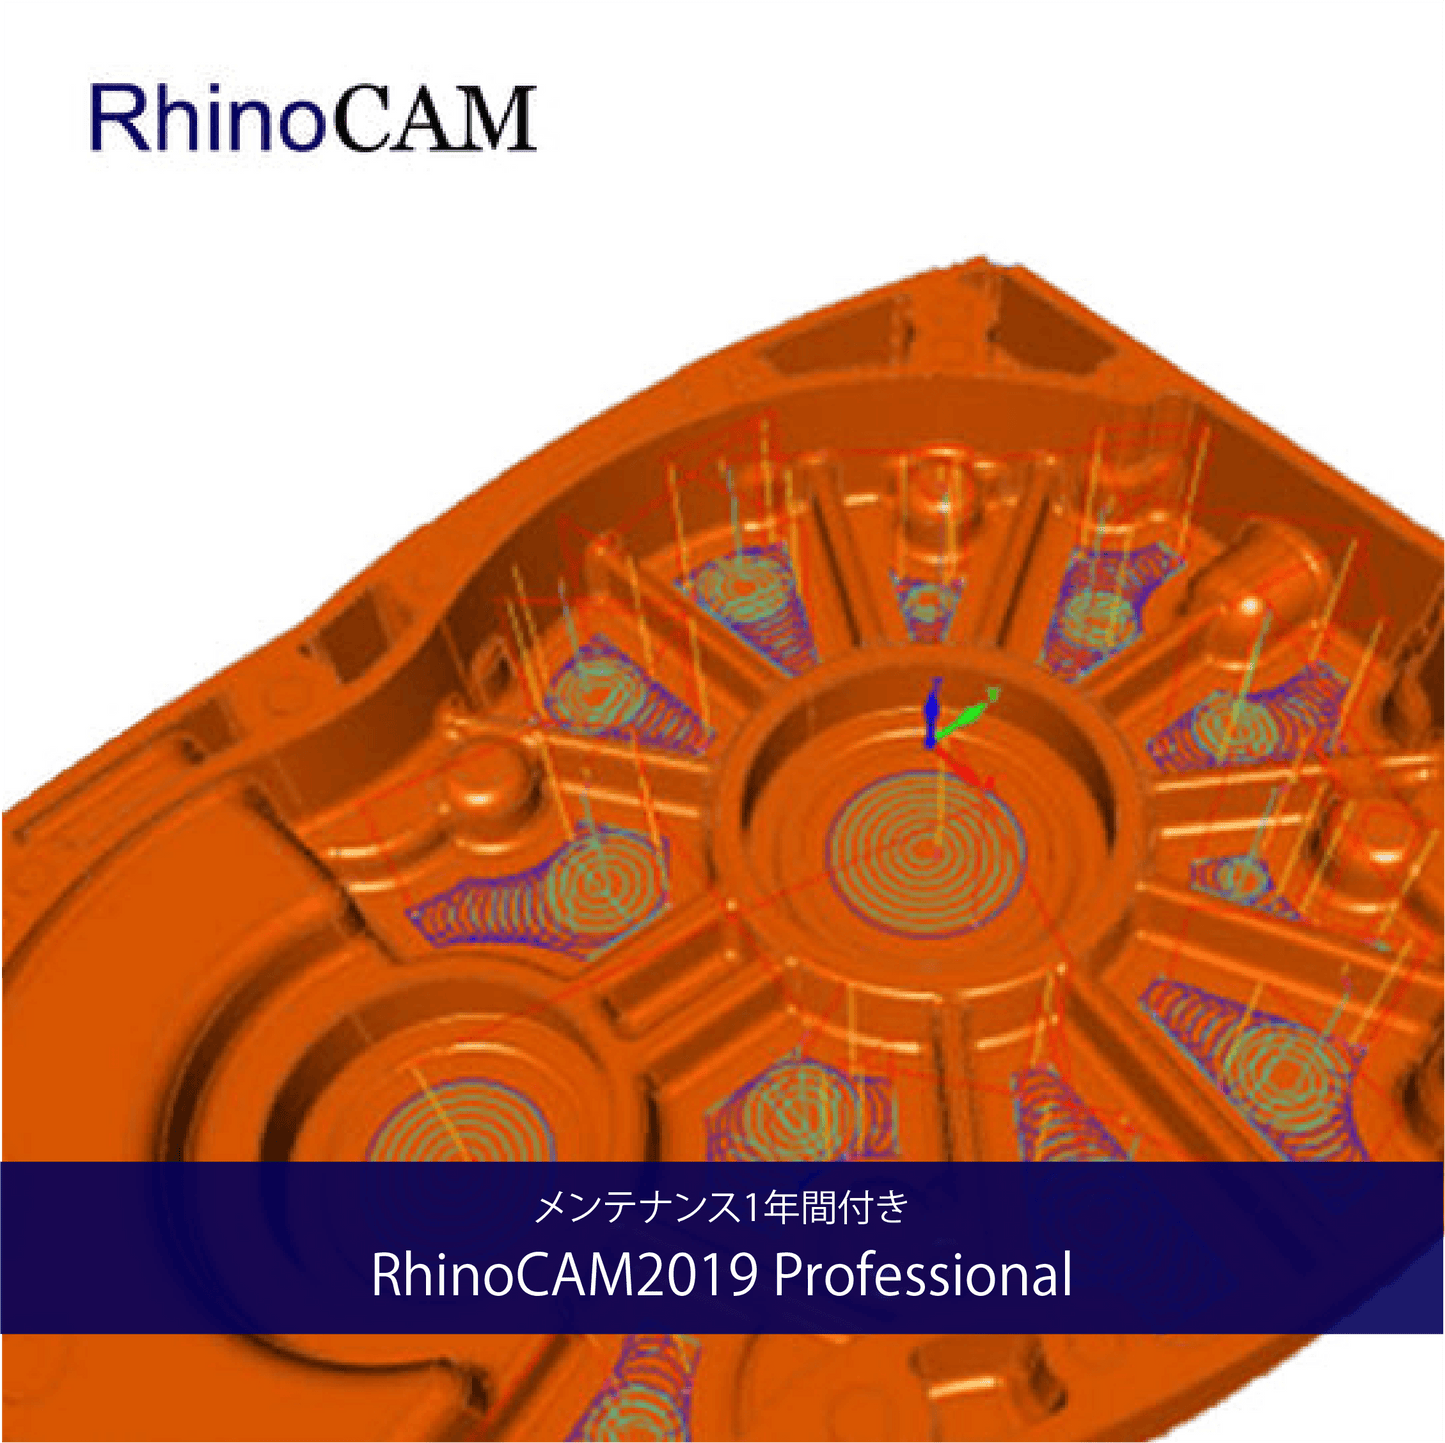 RhinoCAM2019 Professional+保守付き